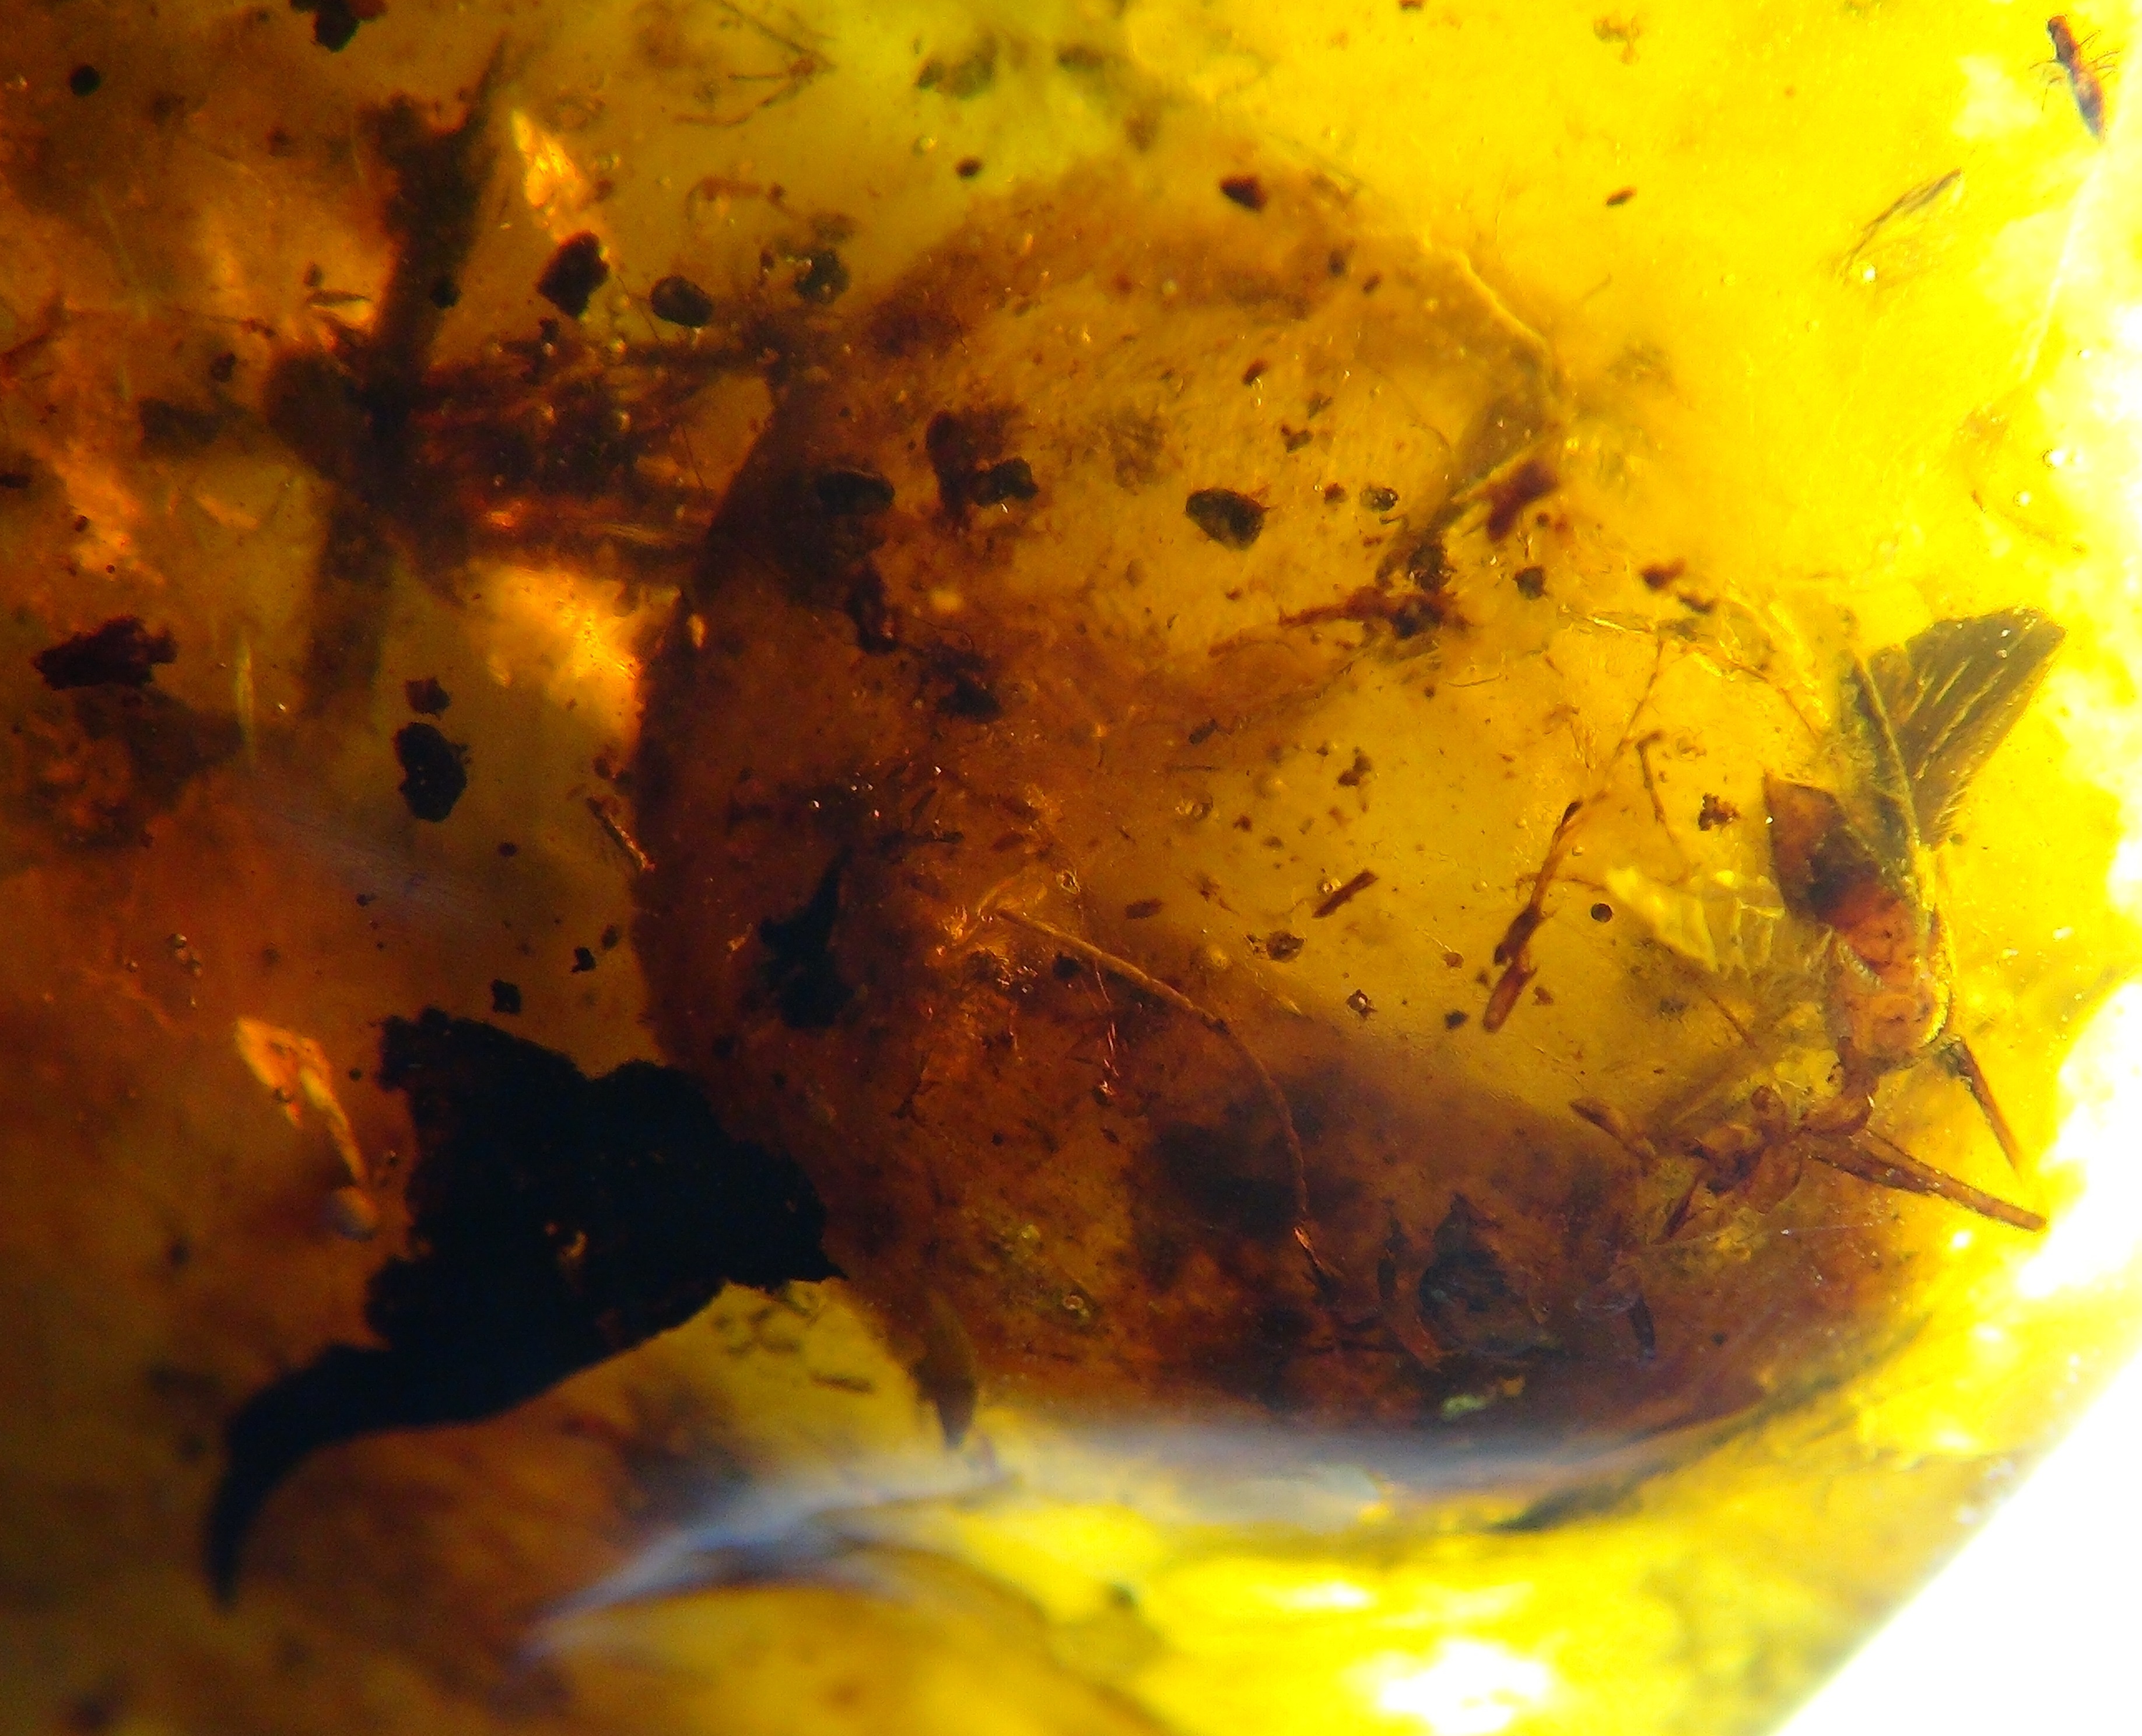 bird eggs found in burmite amber